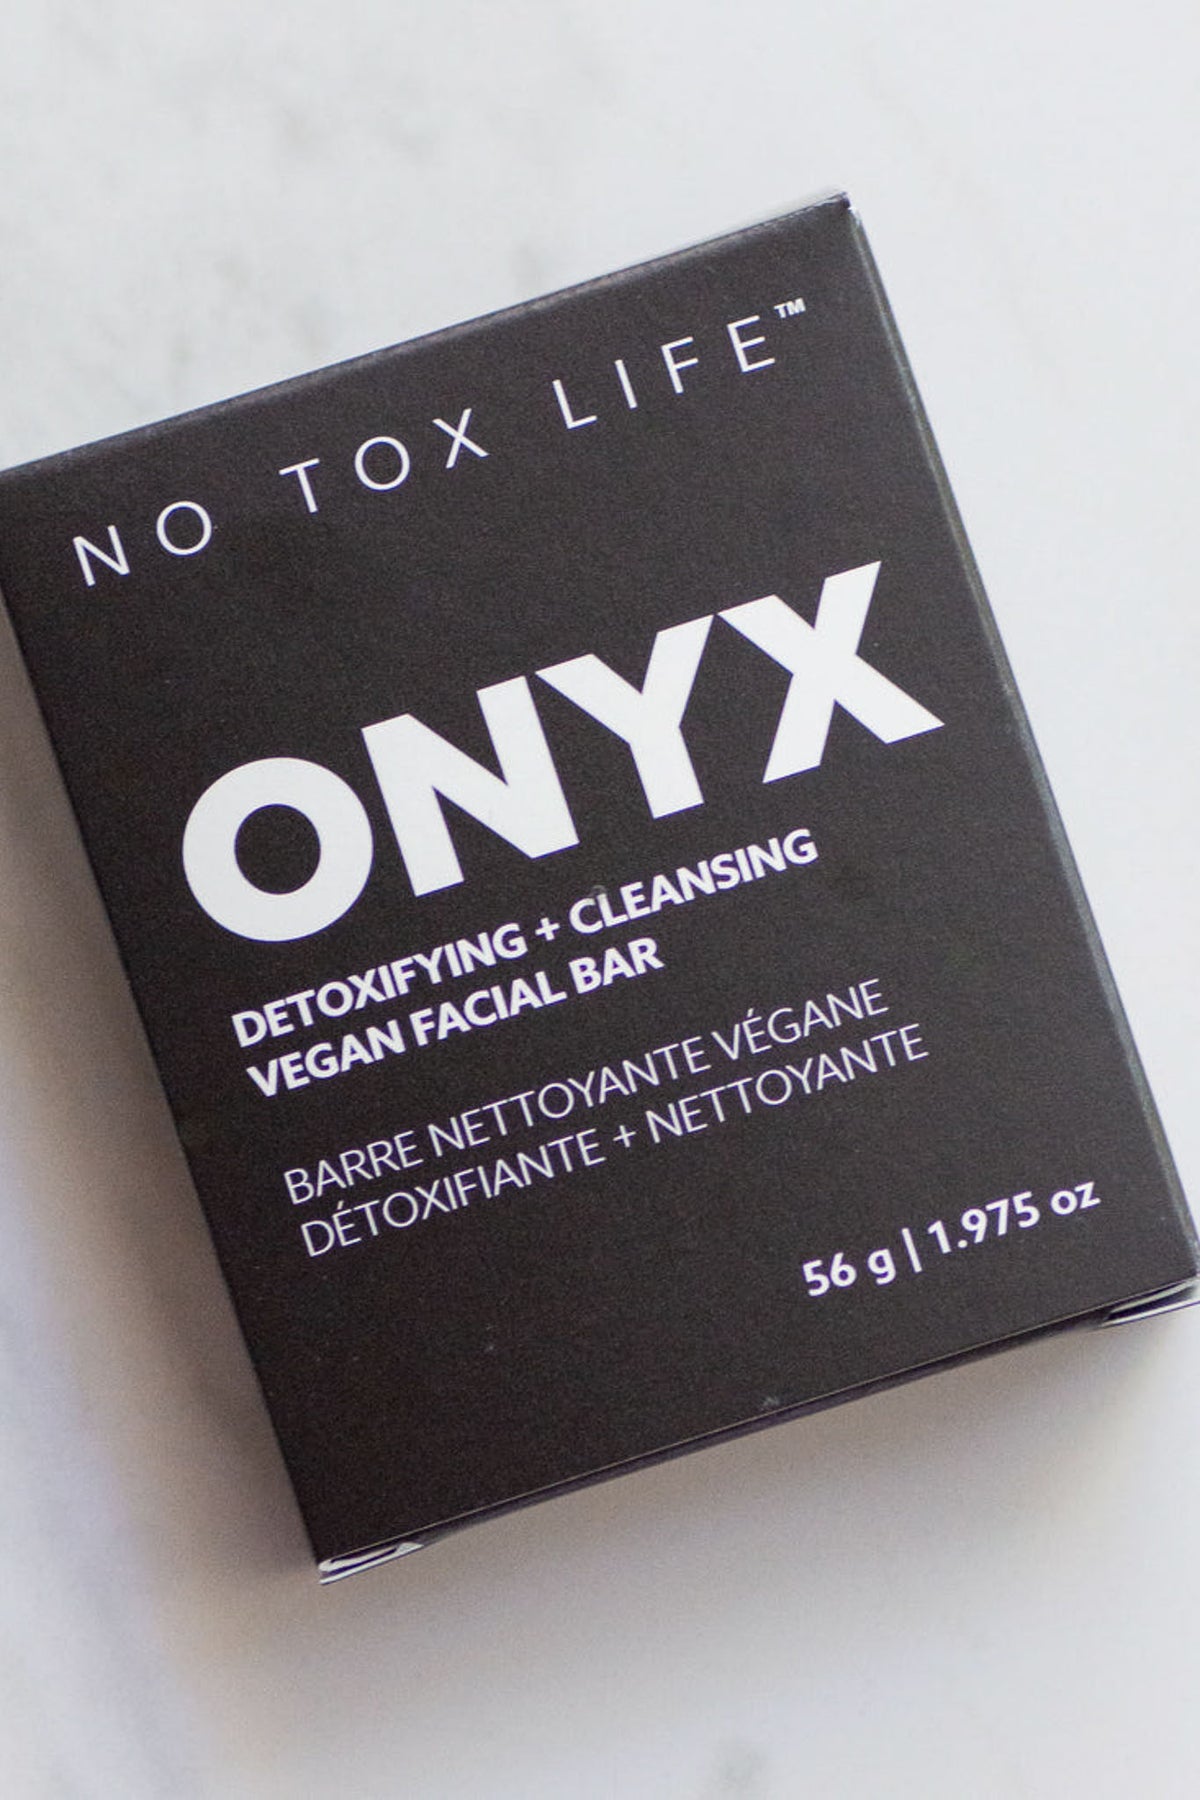 No Tox Life Onyx Cleansing Facial Bar